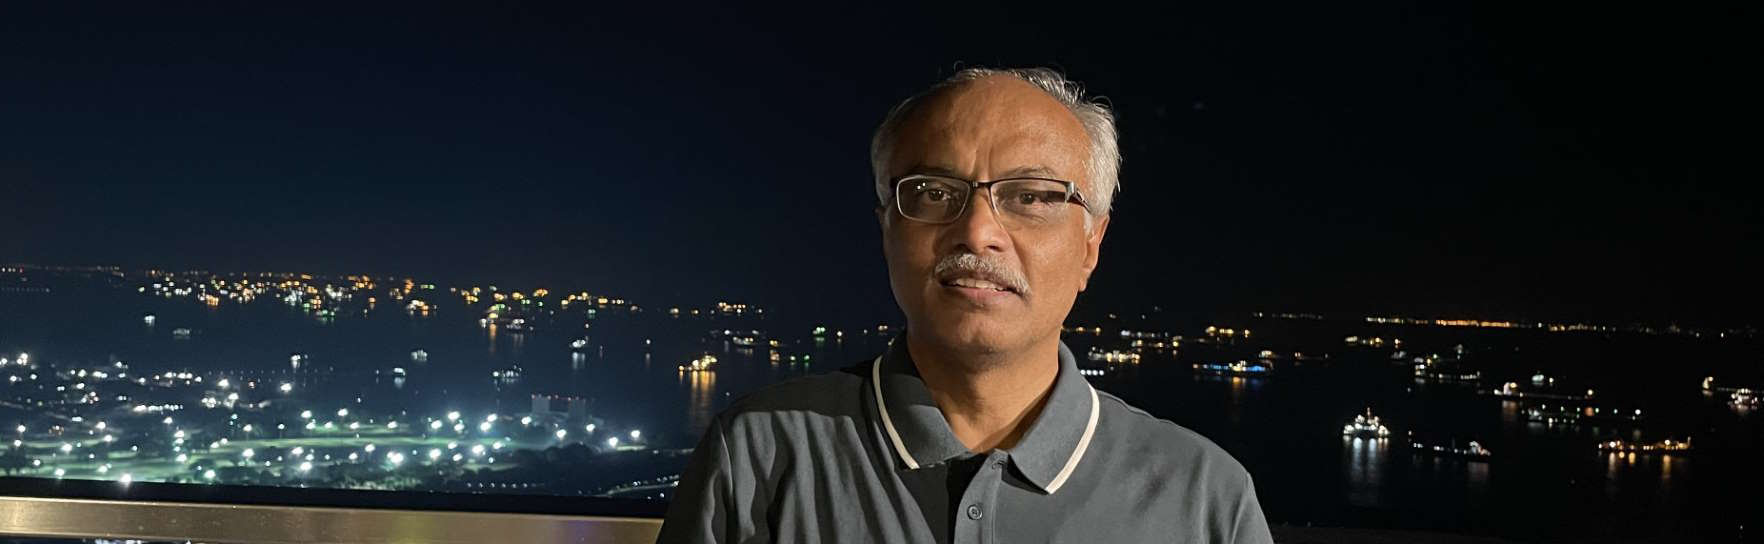 Srikantan Sankaran on a glass balcony overlooking a waterfront at night